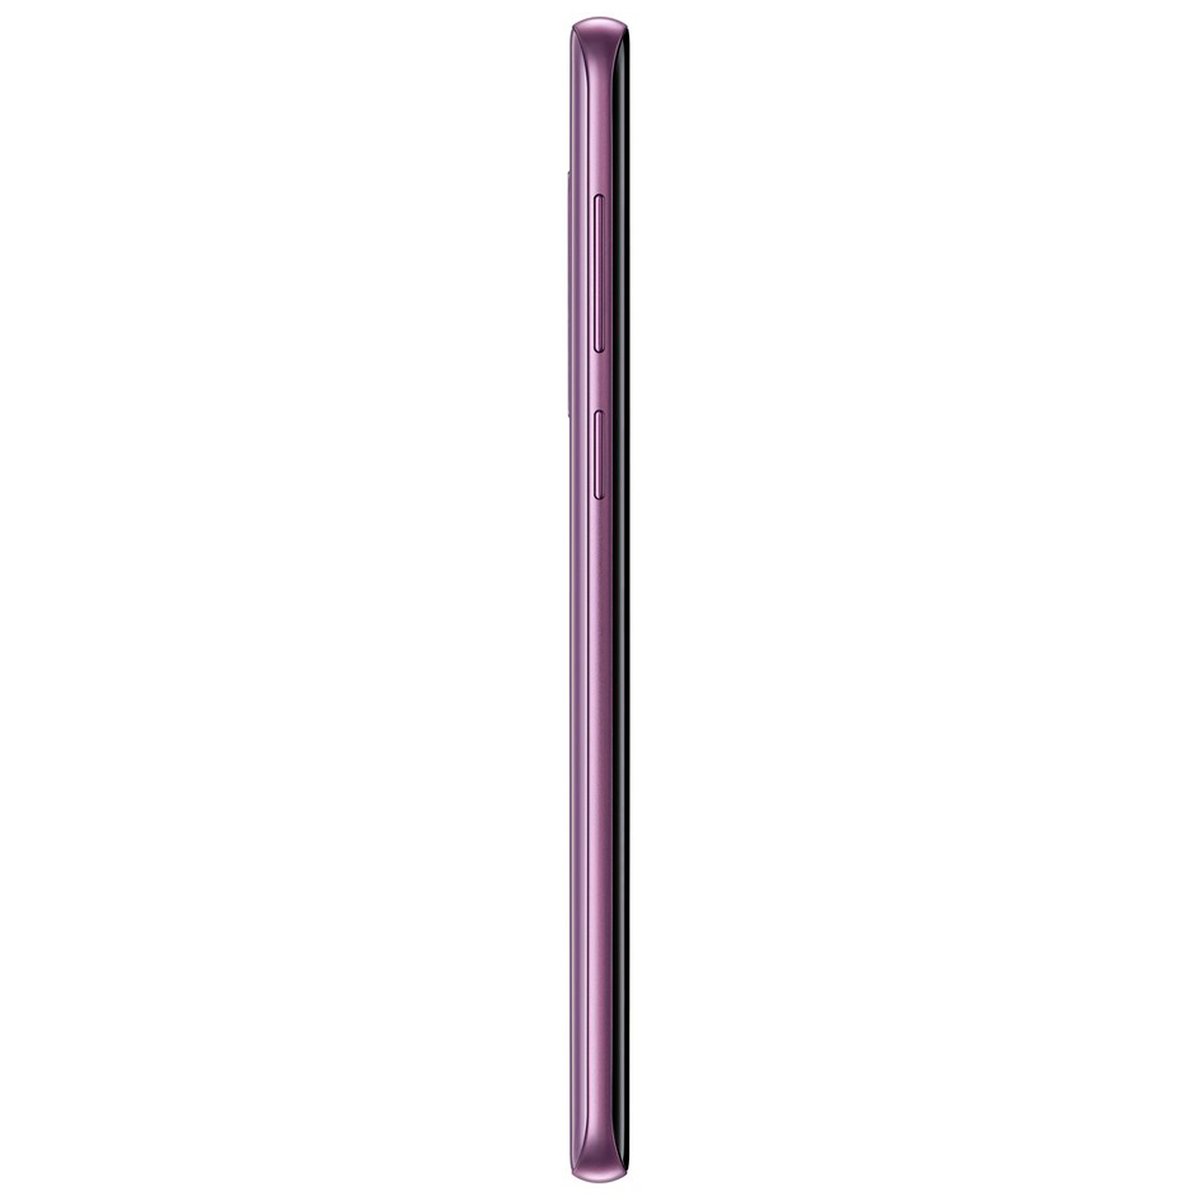 Samsung Galaxy S9+ SMG965 128GB 4G  Lilac Purple